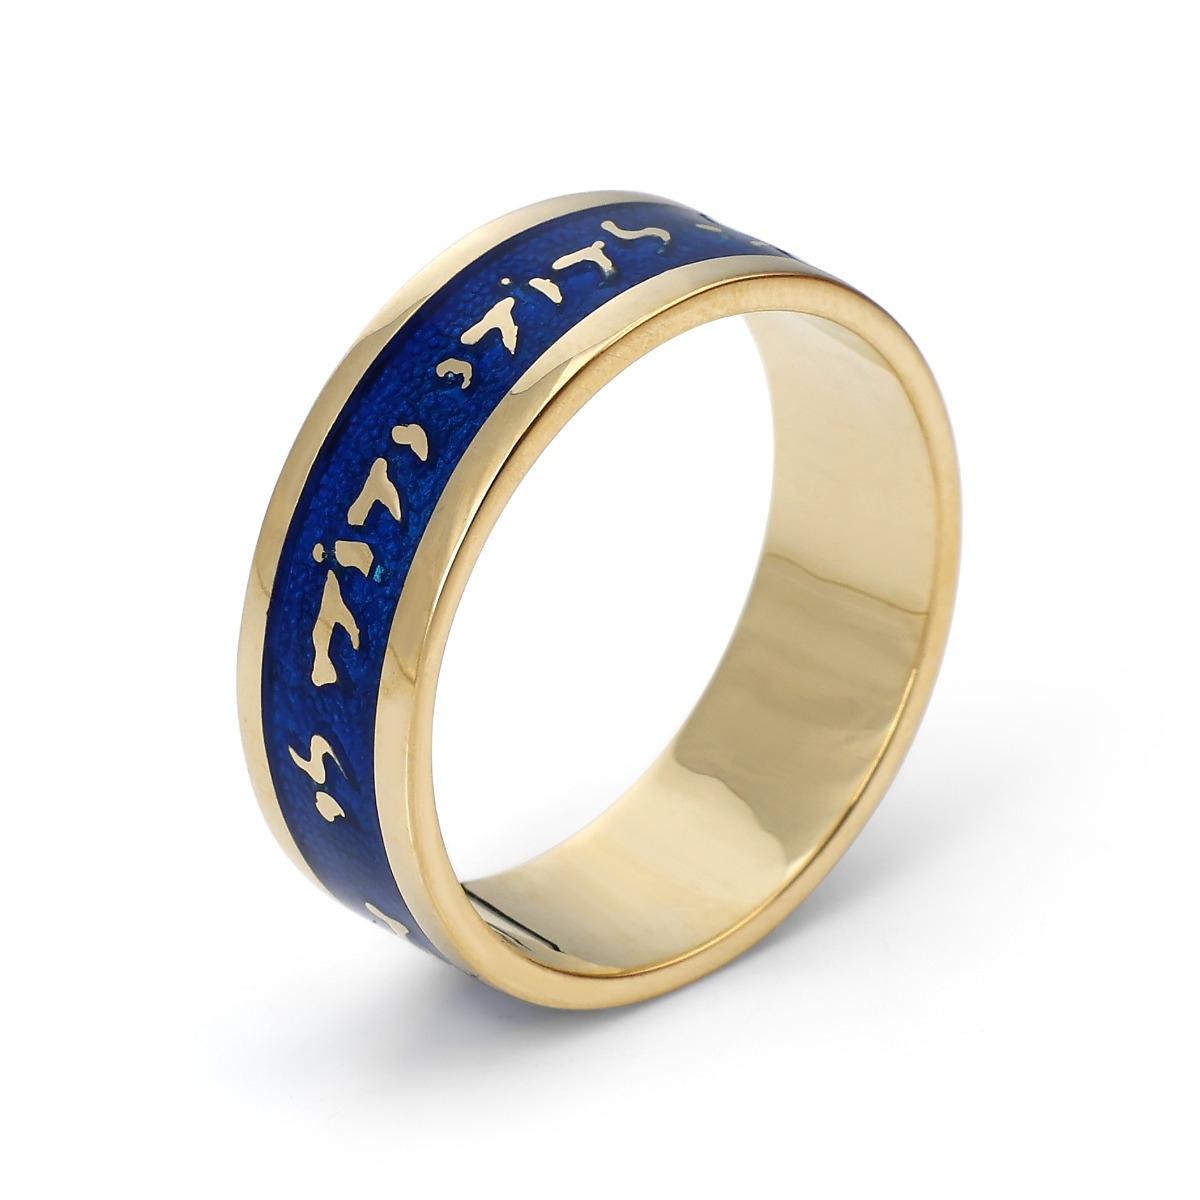 14K Gold and Blue Enamel My Beloved Ring - 1